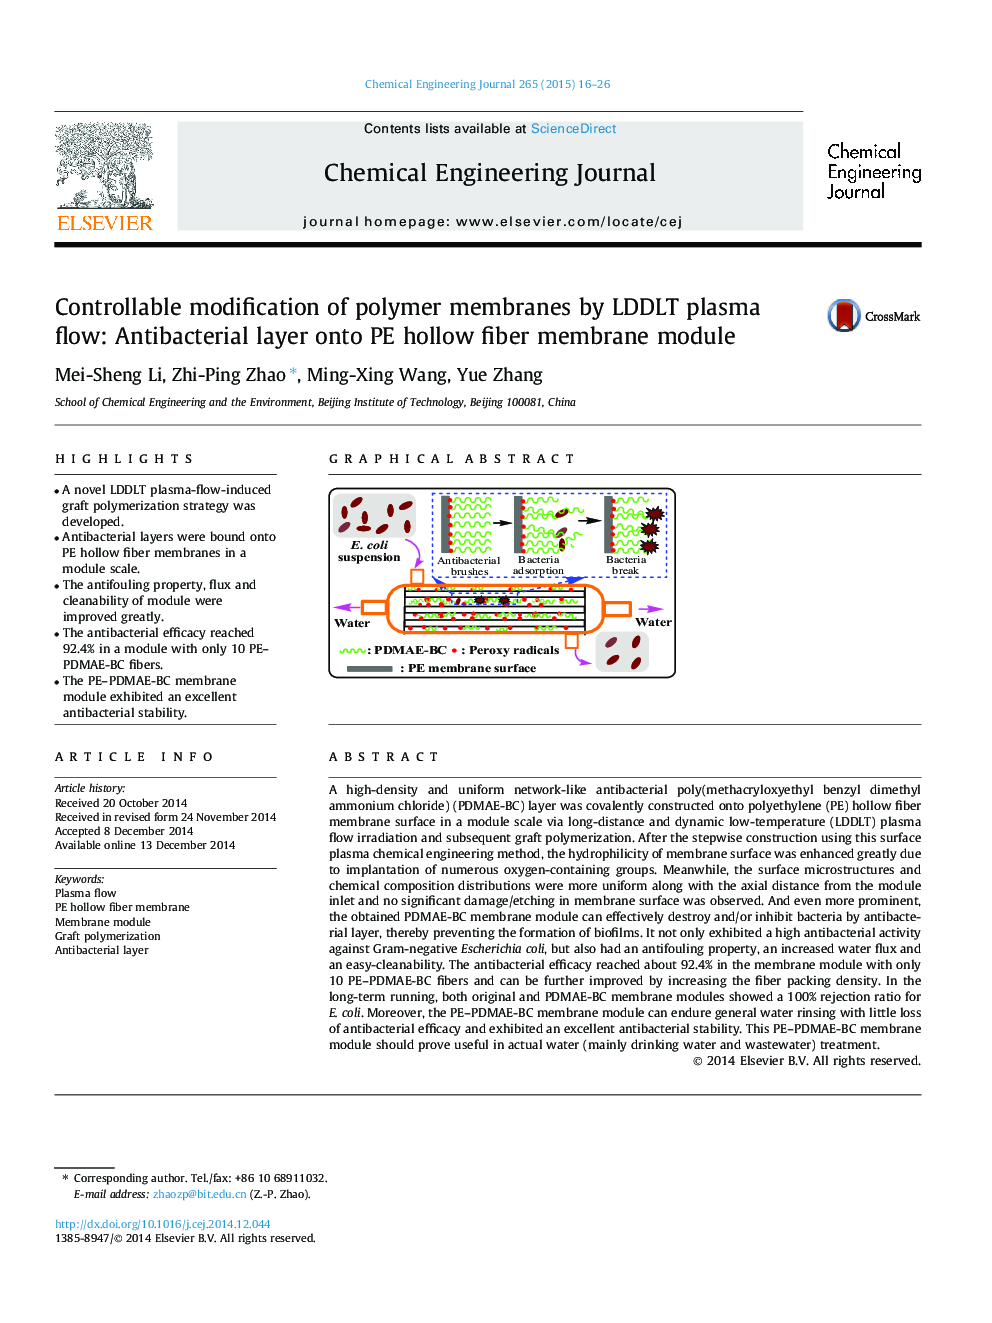 Controllable modification of polymer membranes by LDDLT plasma flow: Antibacterial layer onto PE hollow fiber membrane module